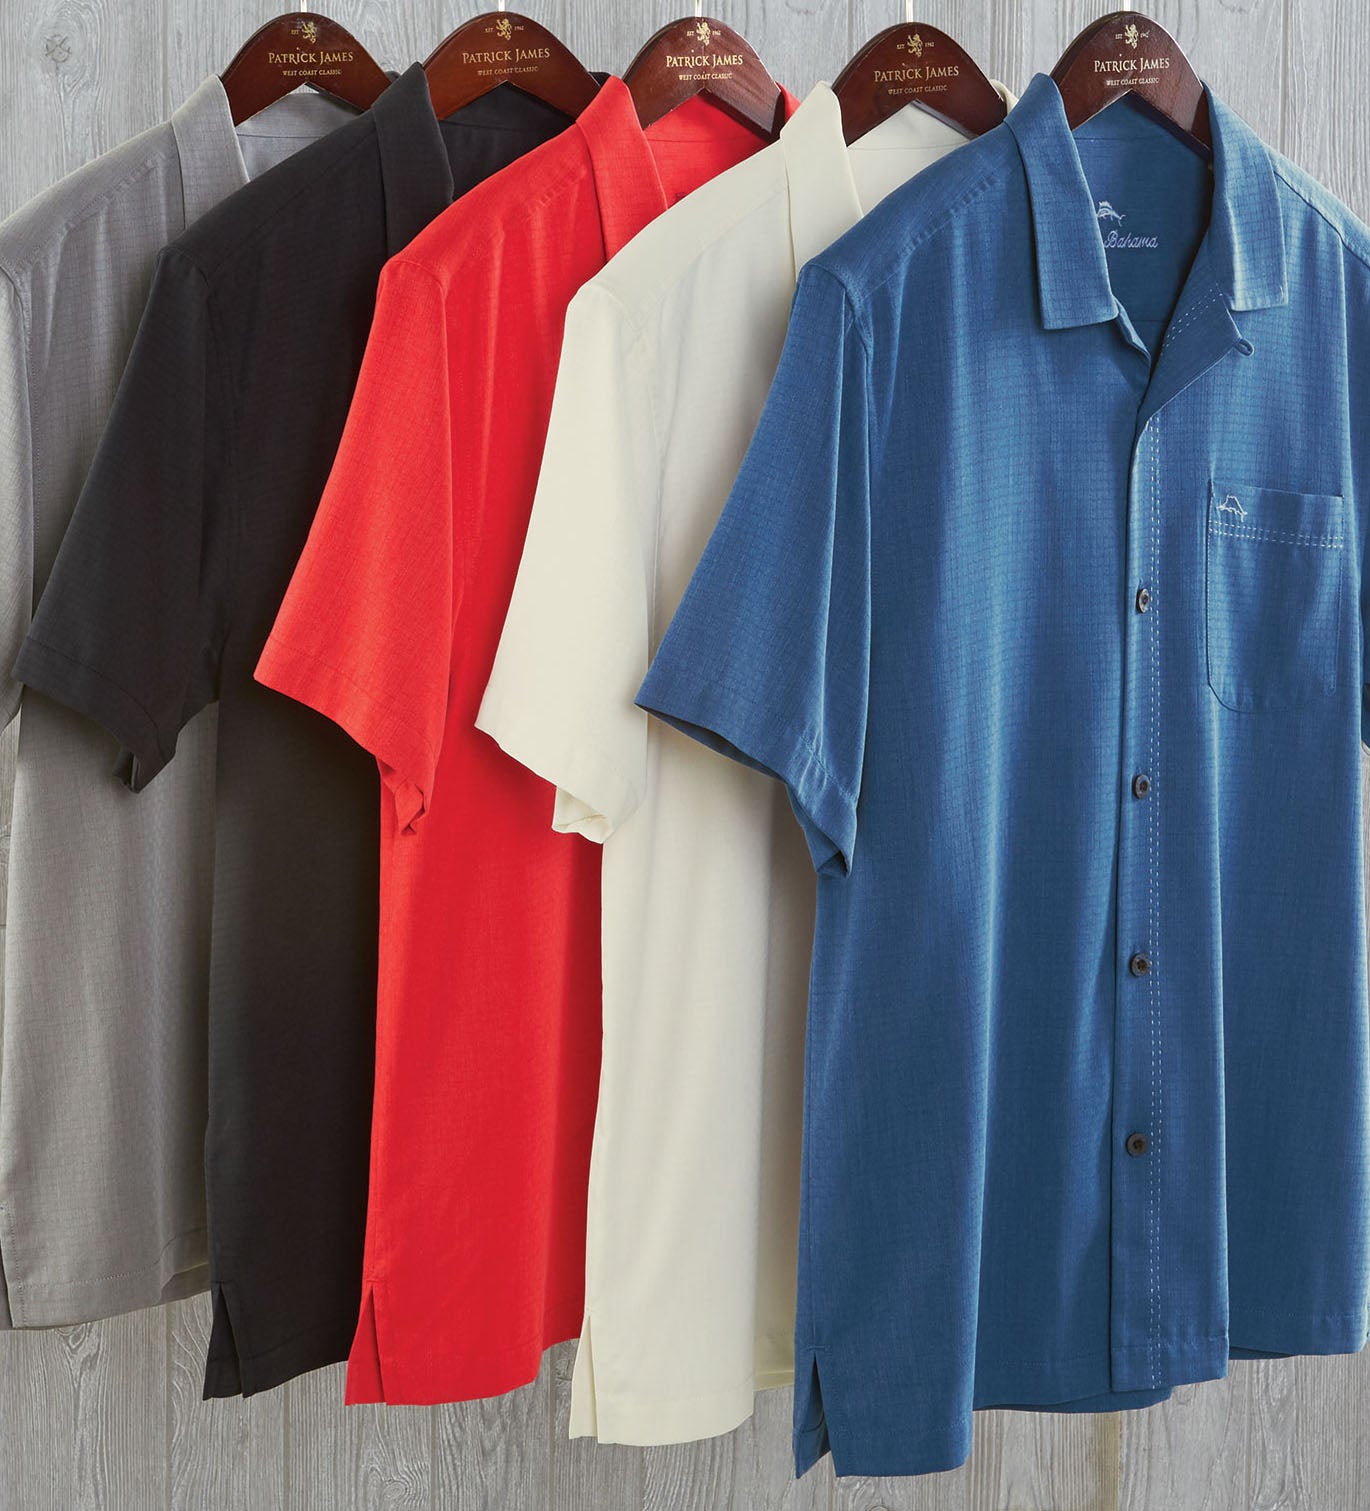 Tommy Bahama Men's Coastal Breeze Check Shirt - Size M, Dockside Blue